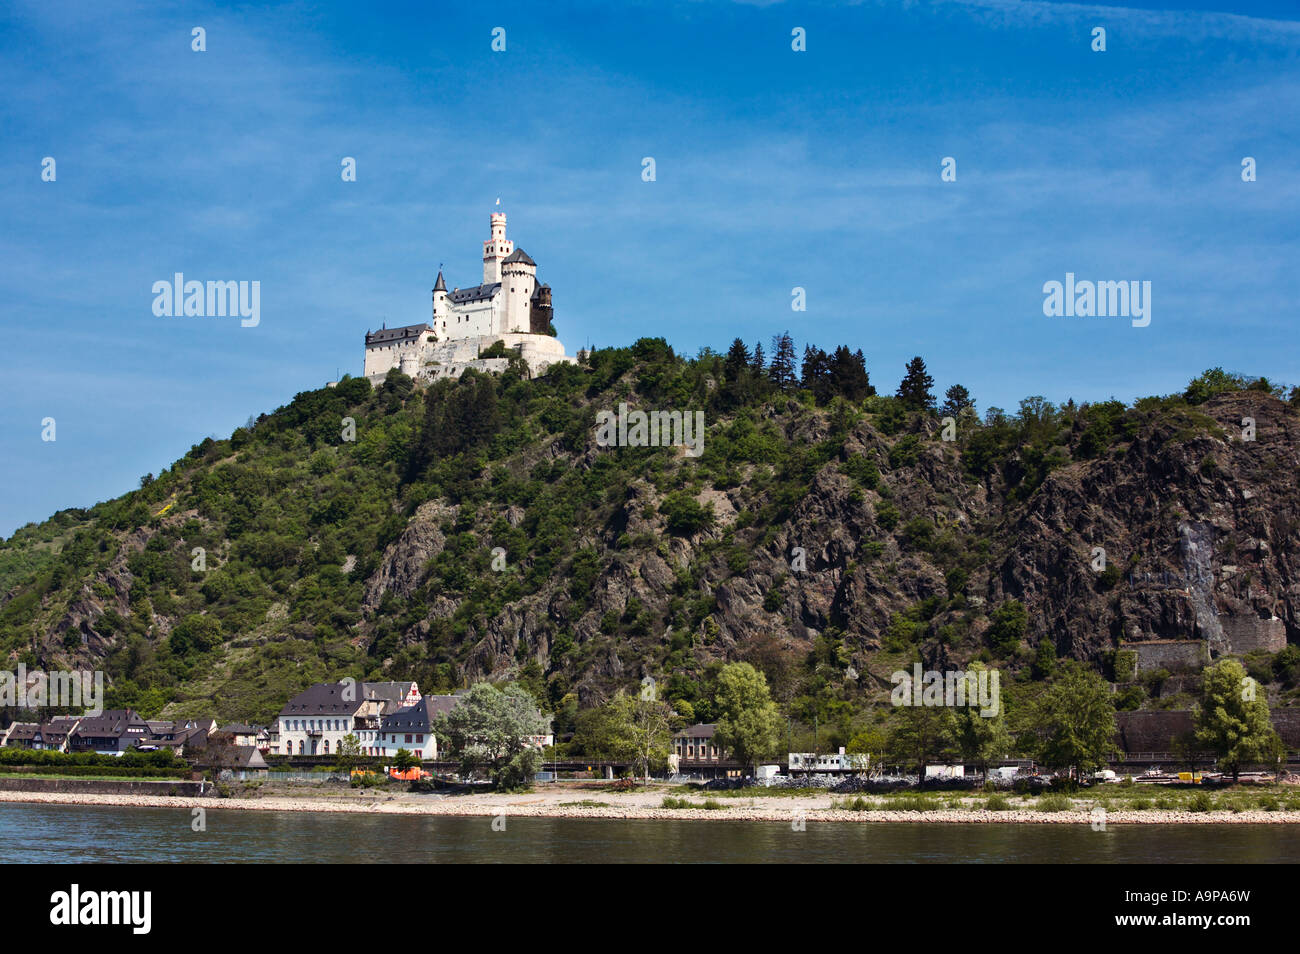 Castle Marksburg near Braubach on the River Rhine, Rhineland, Germany, Europe Stock Photo